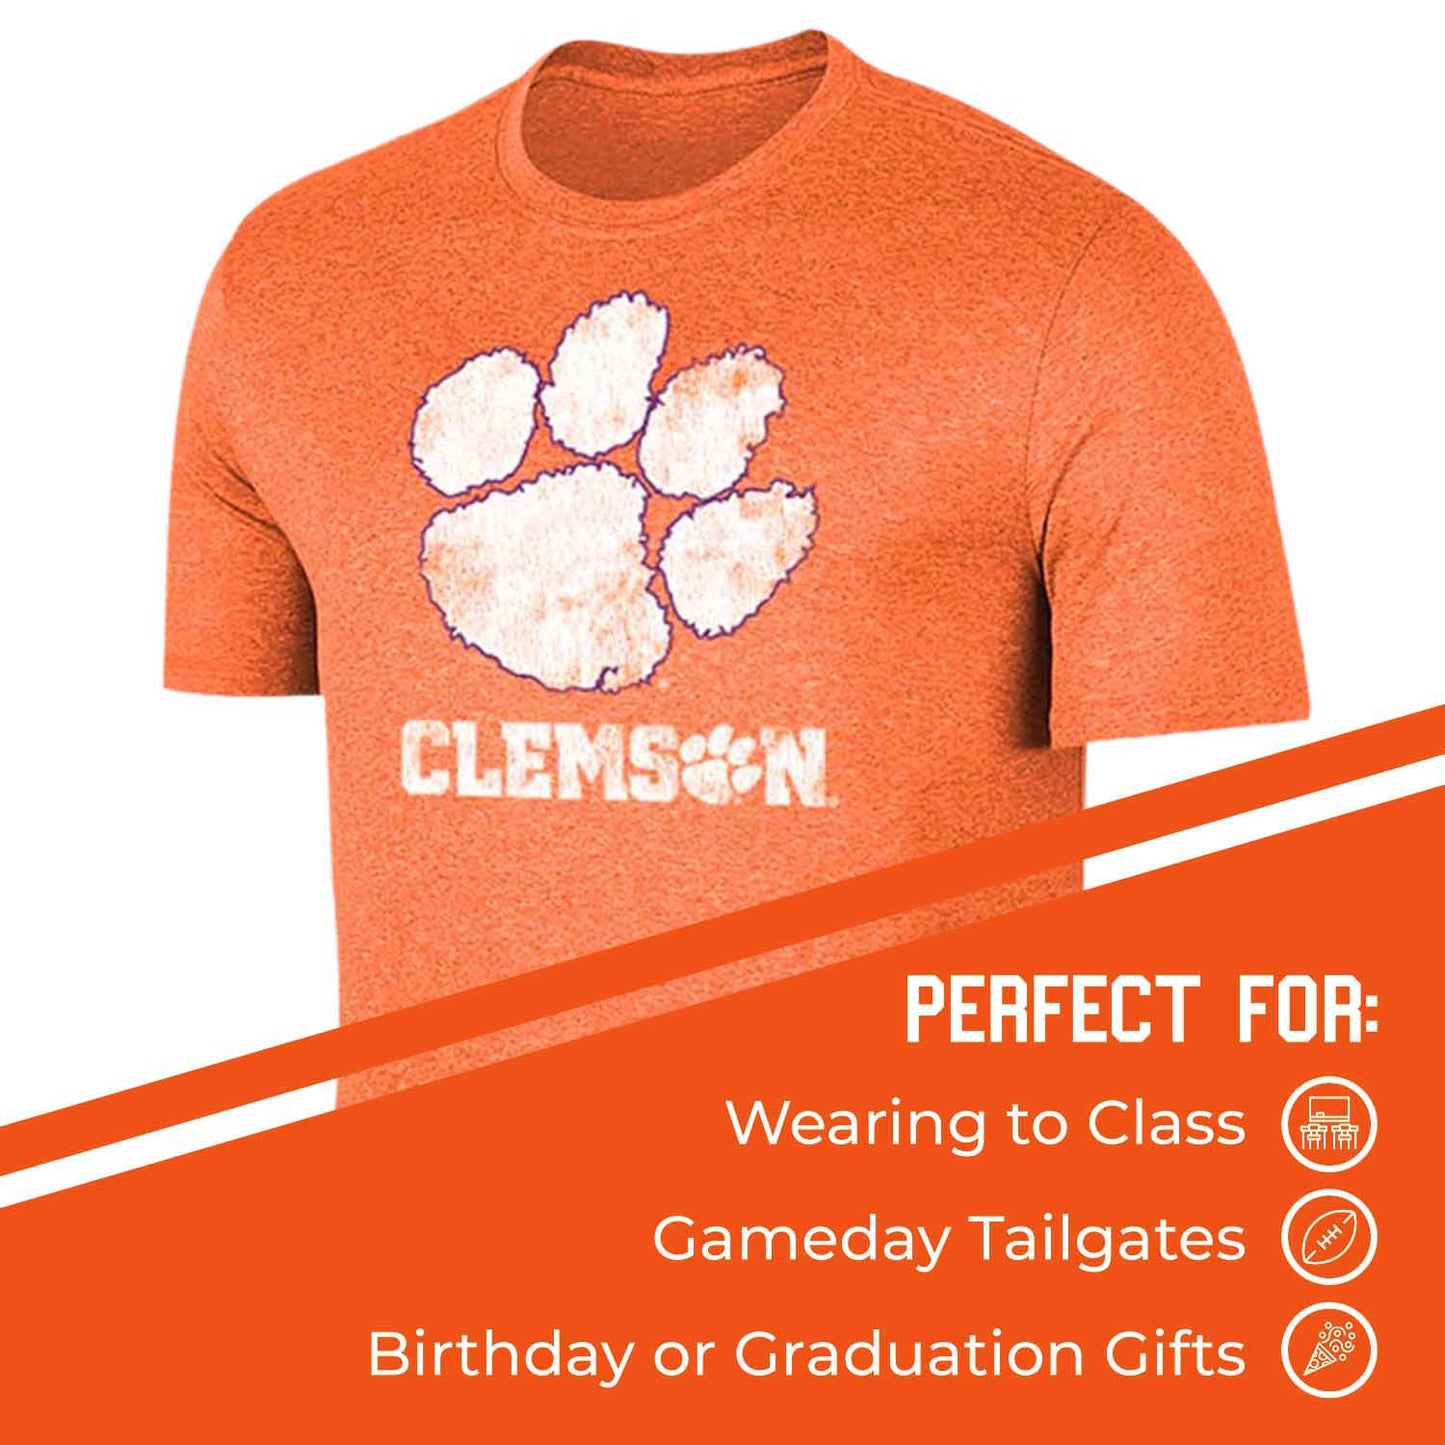 Clemson Tigers Adult MVP Heathered Cotton Blend T-Shirt - Orange